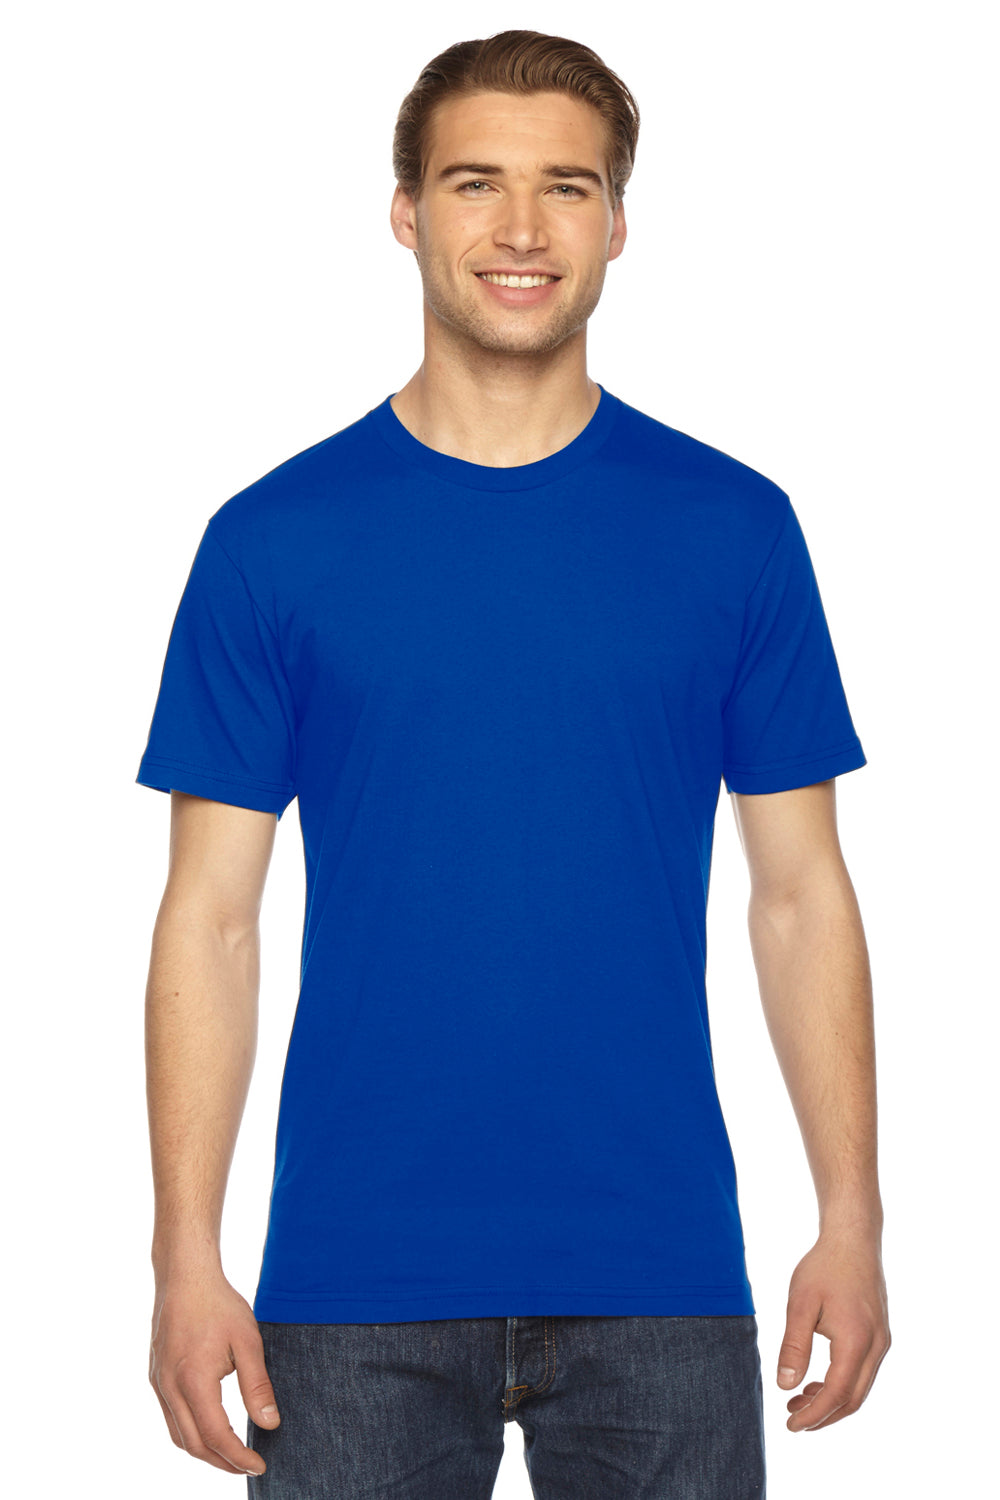 American Apparel 2001 Mens USA Made Fine Jersey Short Sleeve Crewneck T-Shirt Royal Blue Front